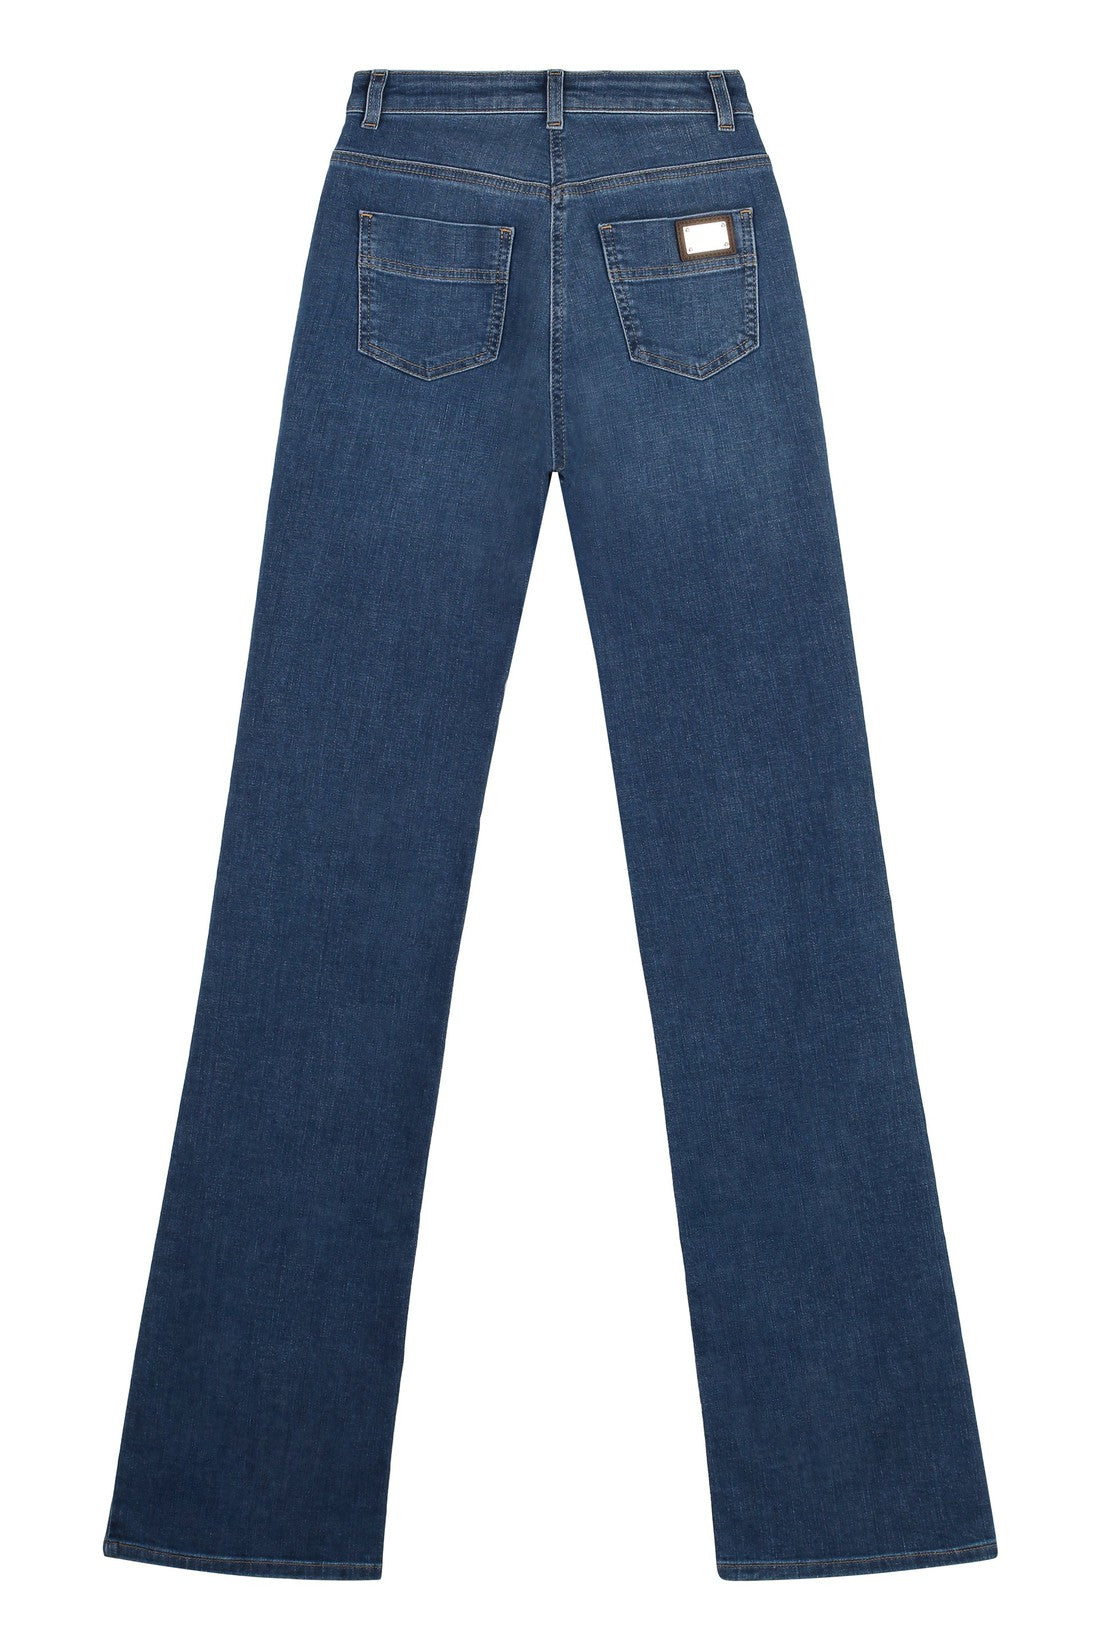 Elisabetta Franchi-OUTLET-SALE-High-rise flared jeans-ARCHIVIST